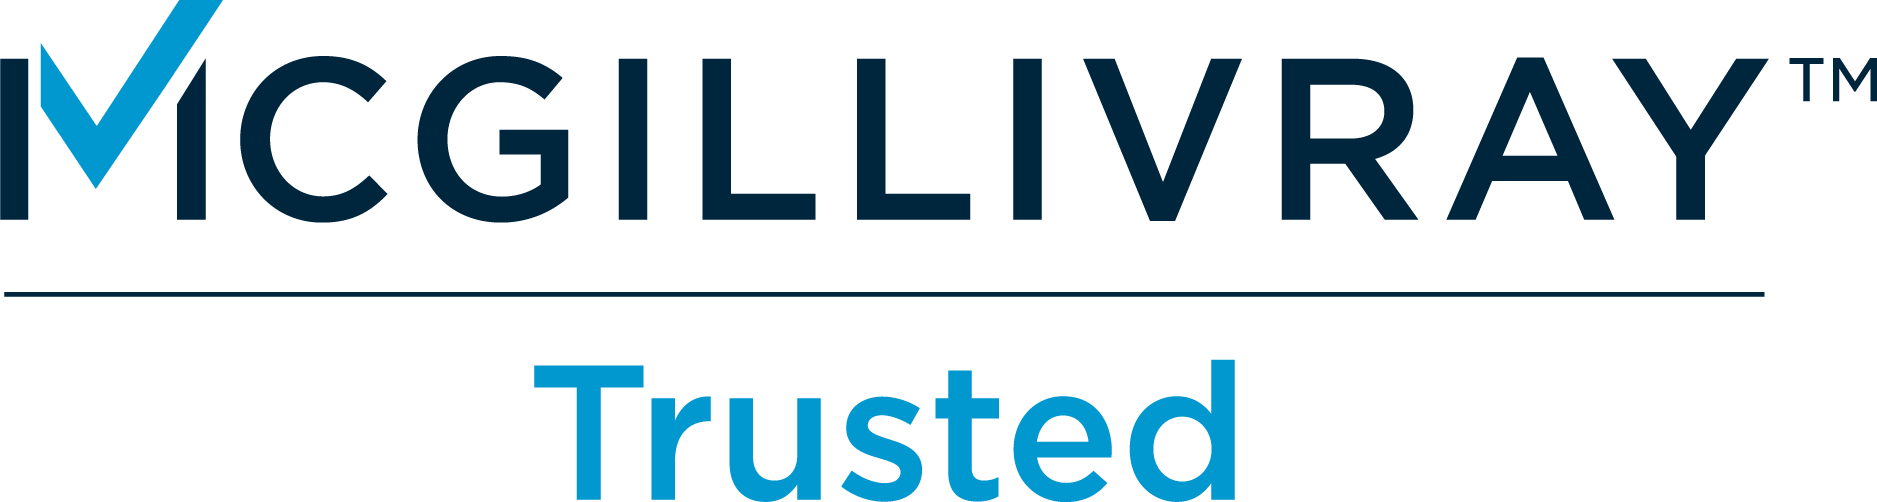 McGillivray Trusted Logo